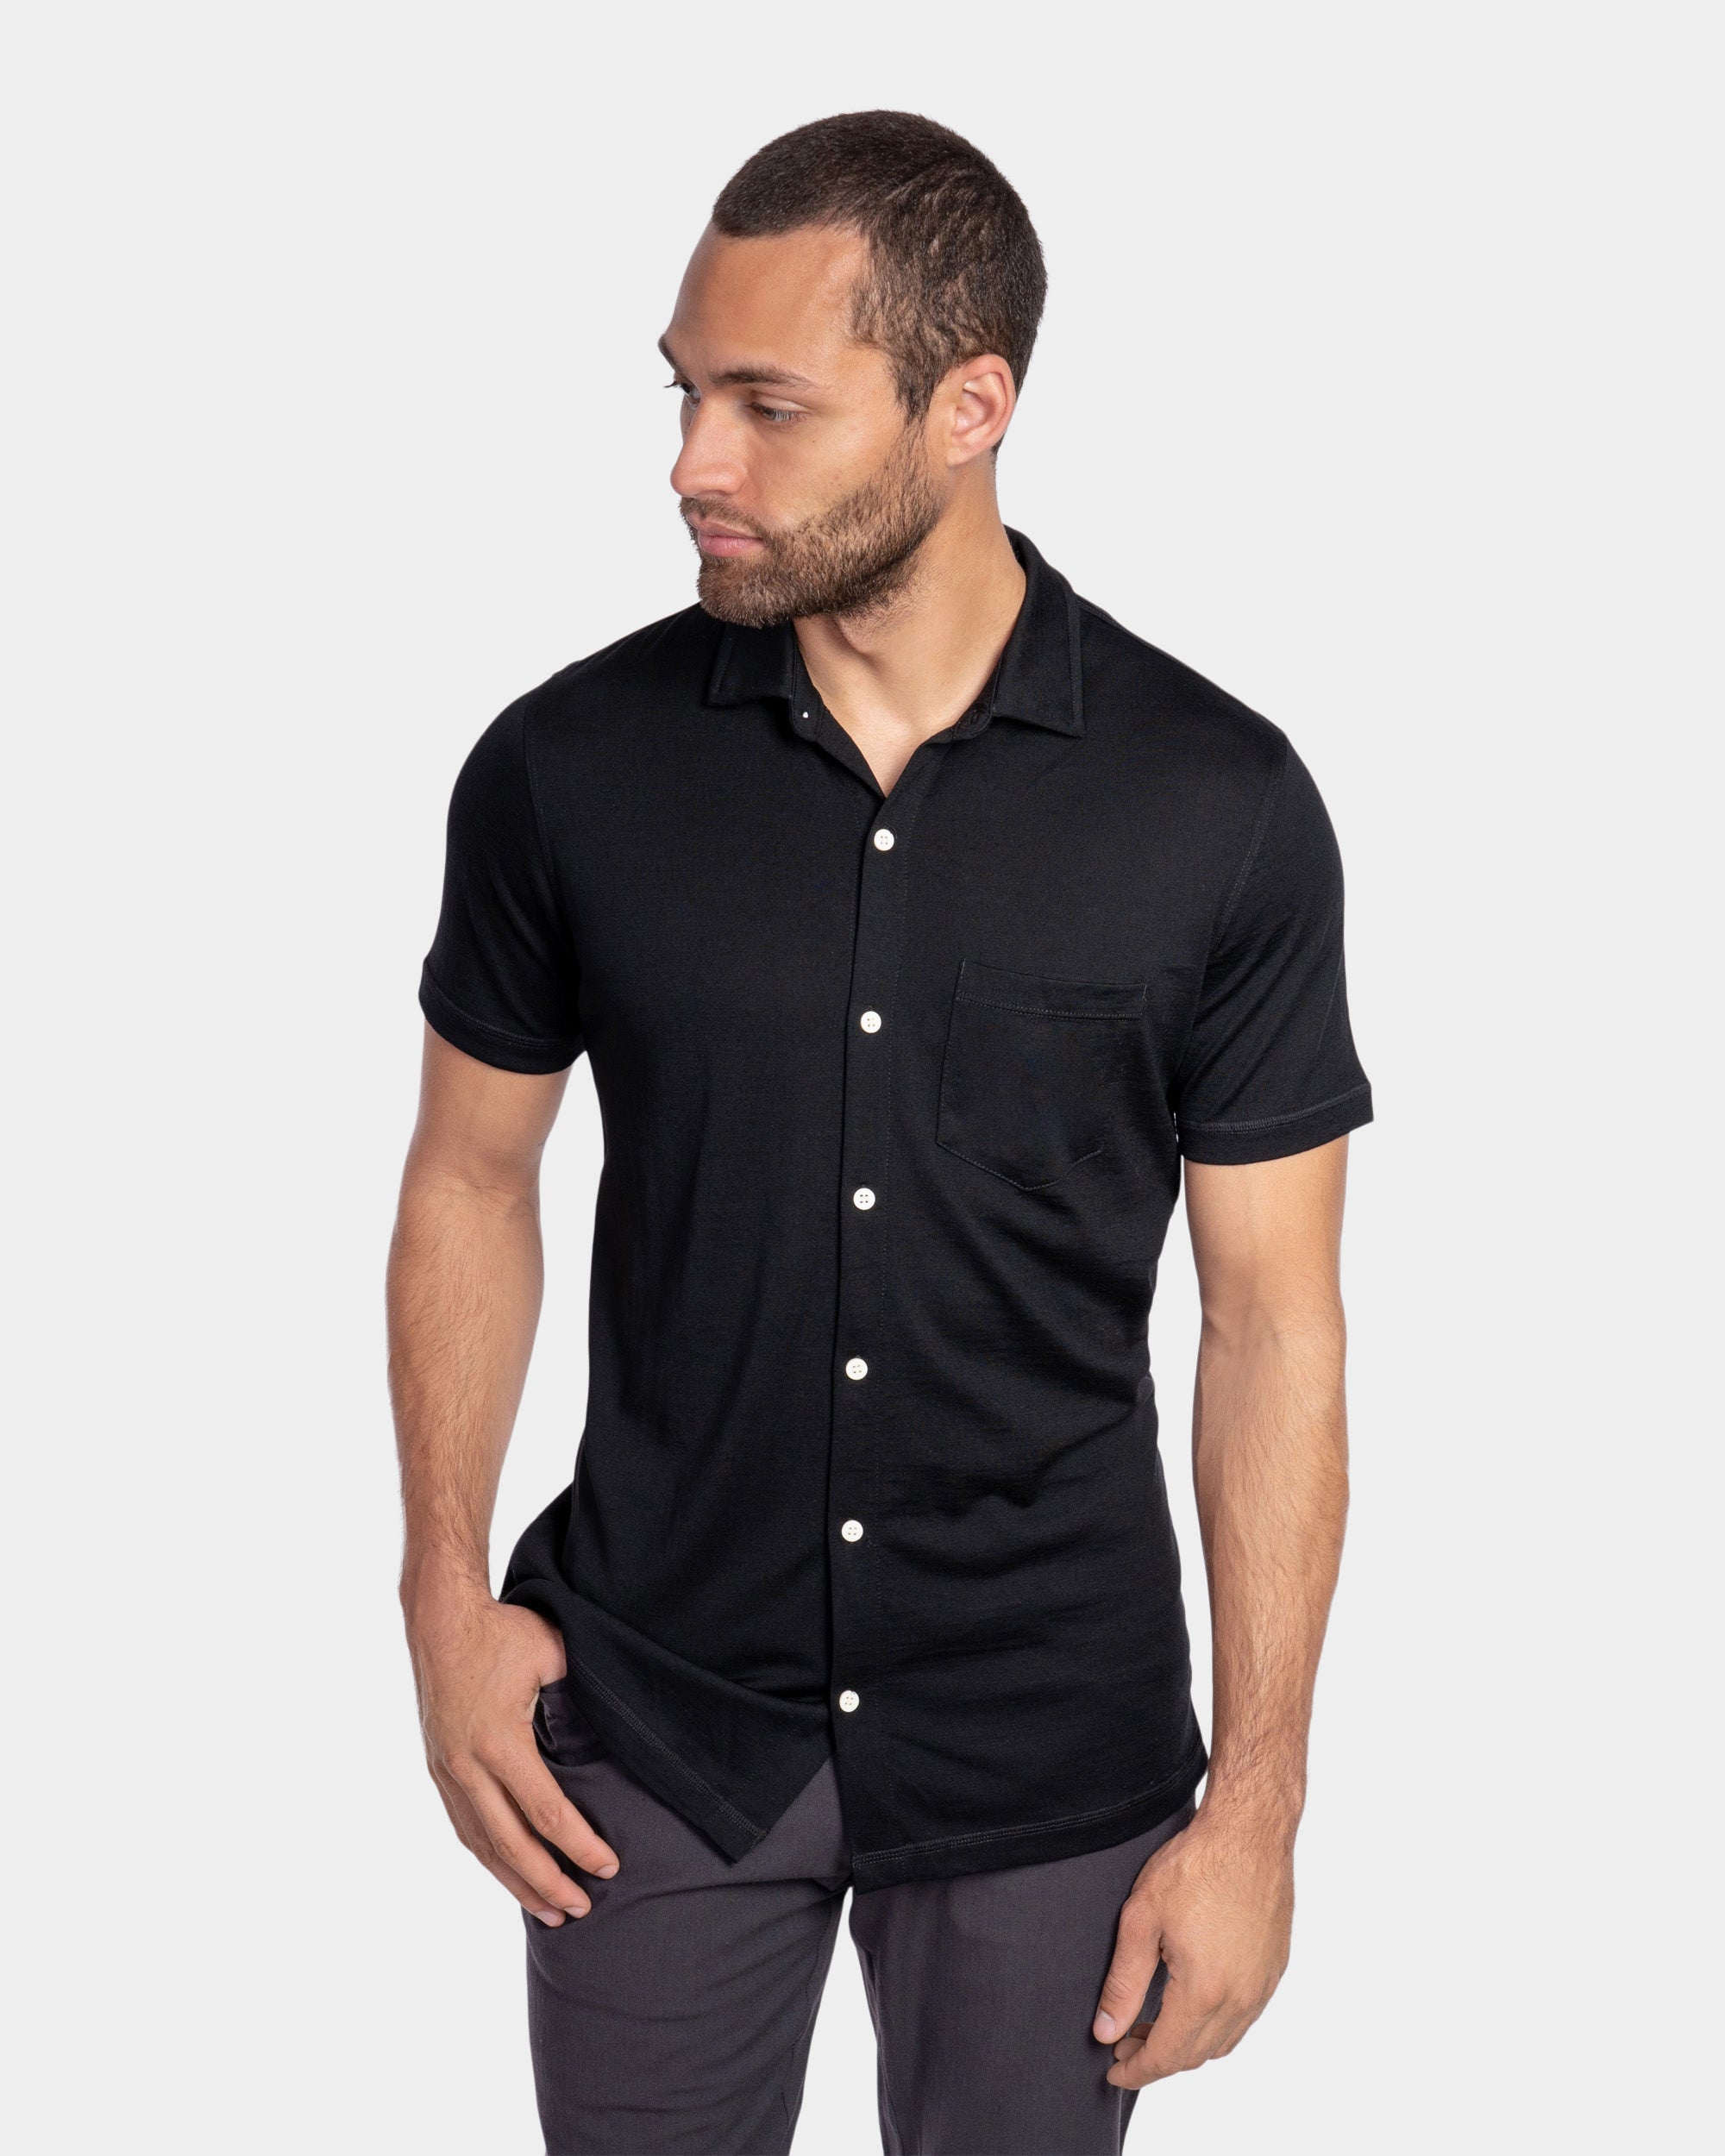 Men's Button-Down Short-Sleeve Shirts